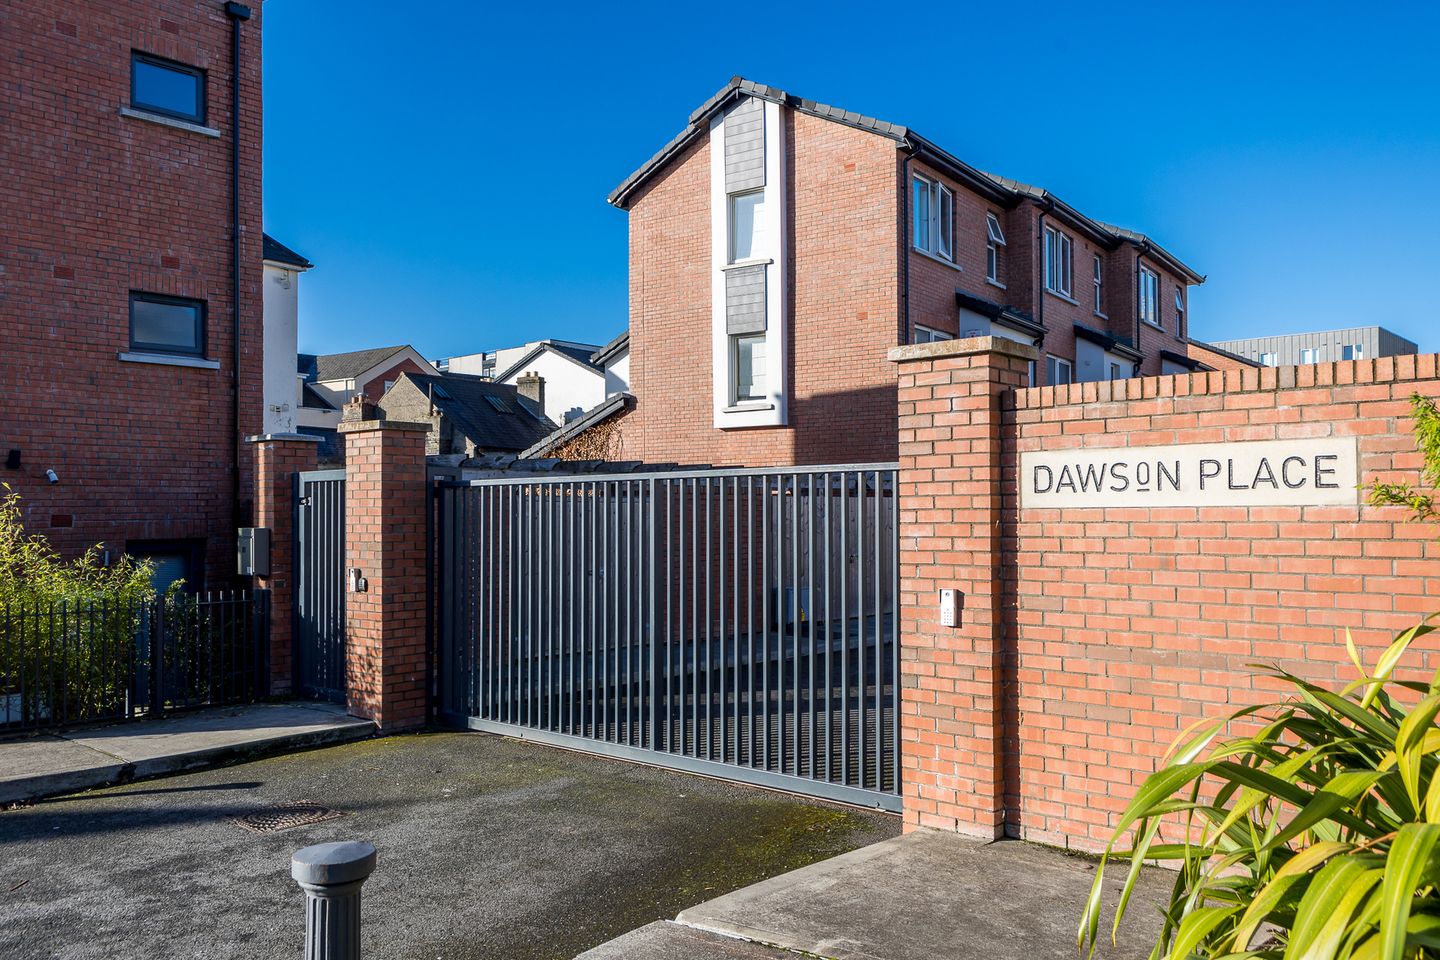 9 Dawson Place, Arbour Hill, Dublin 7, D07AH99